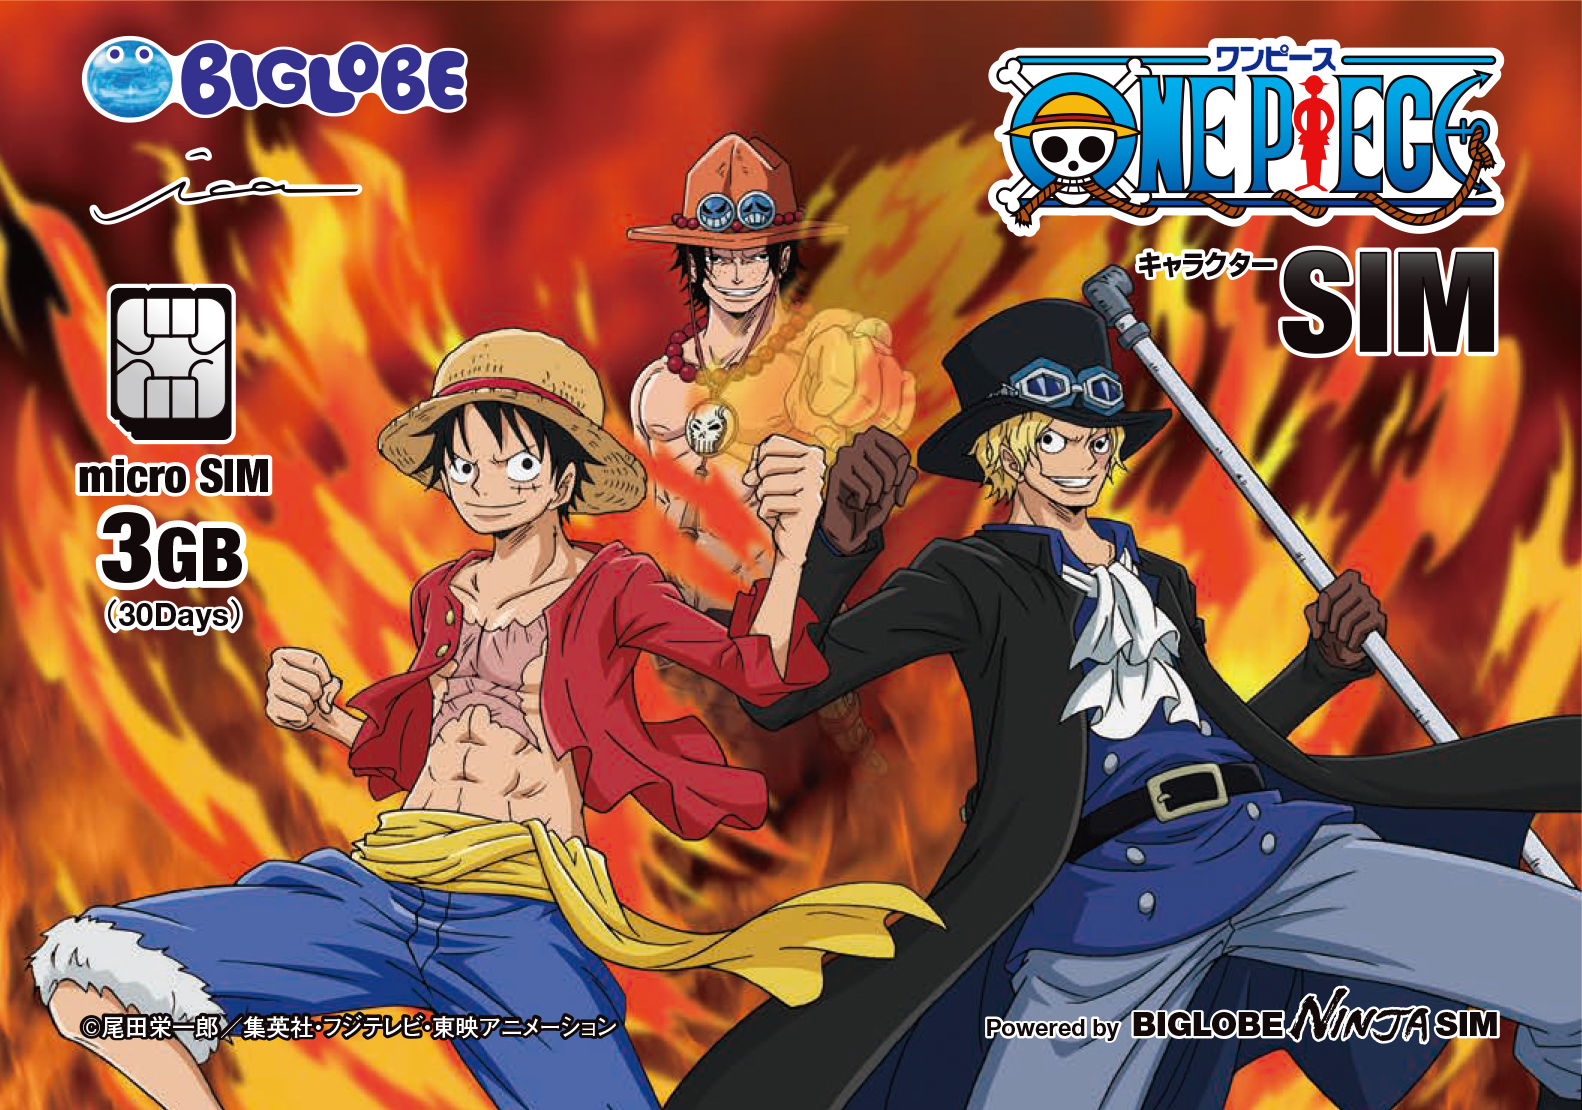 Biglobeが 訪日外国人向け キャラクターsim One Piece を12月4日より販売開始 30日間3gbまで使えるプリペイドsim ビッグローブ株式会社のプレスリリース